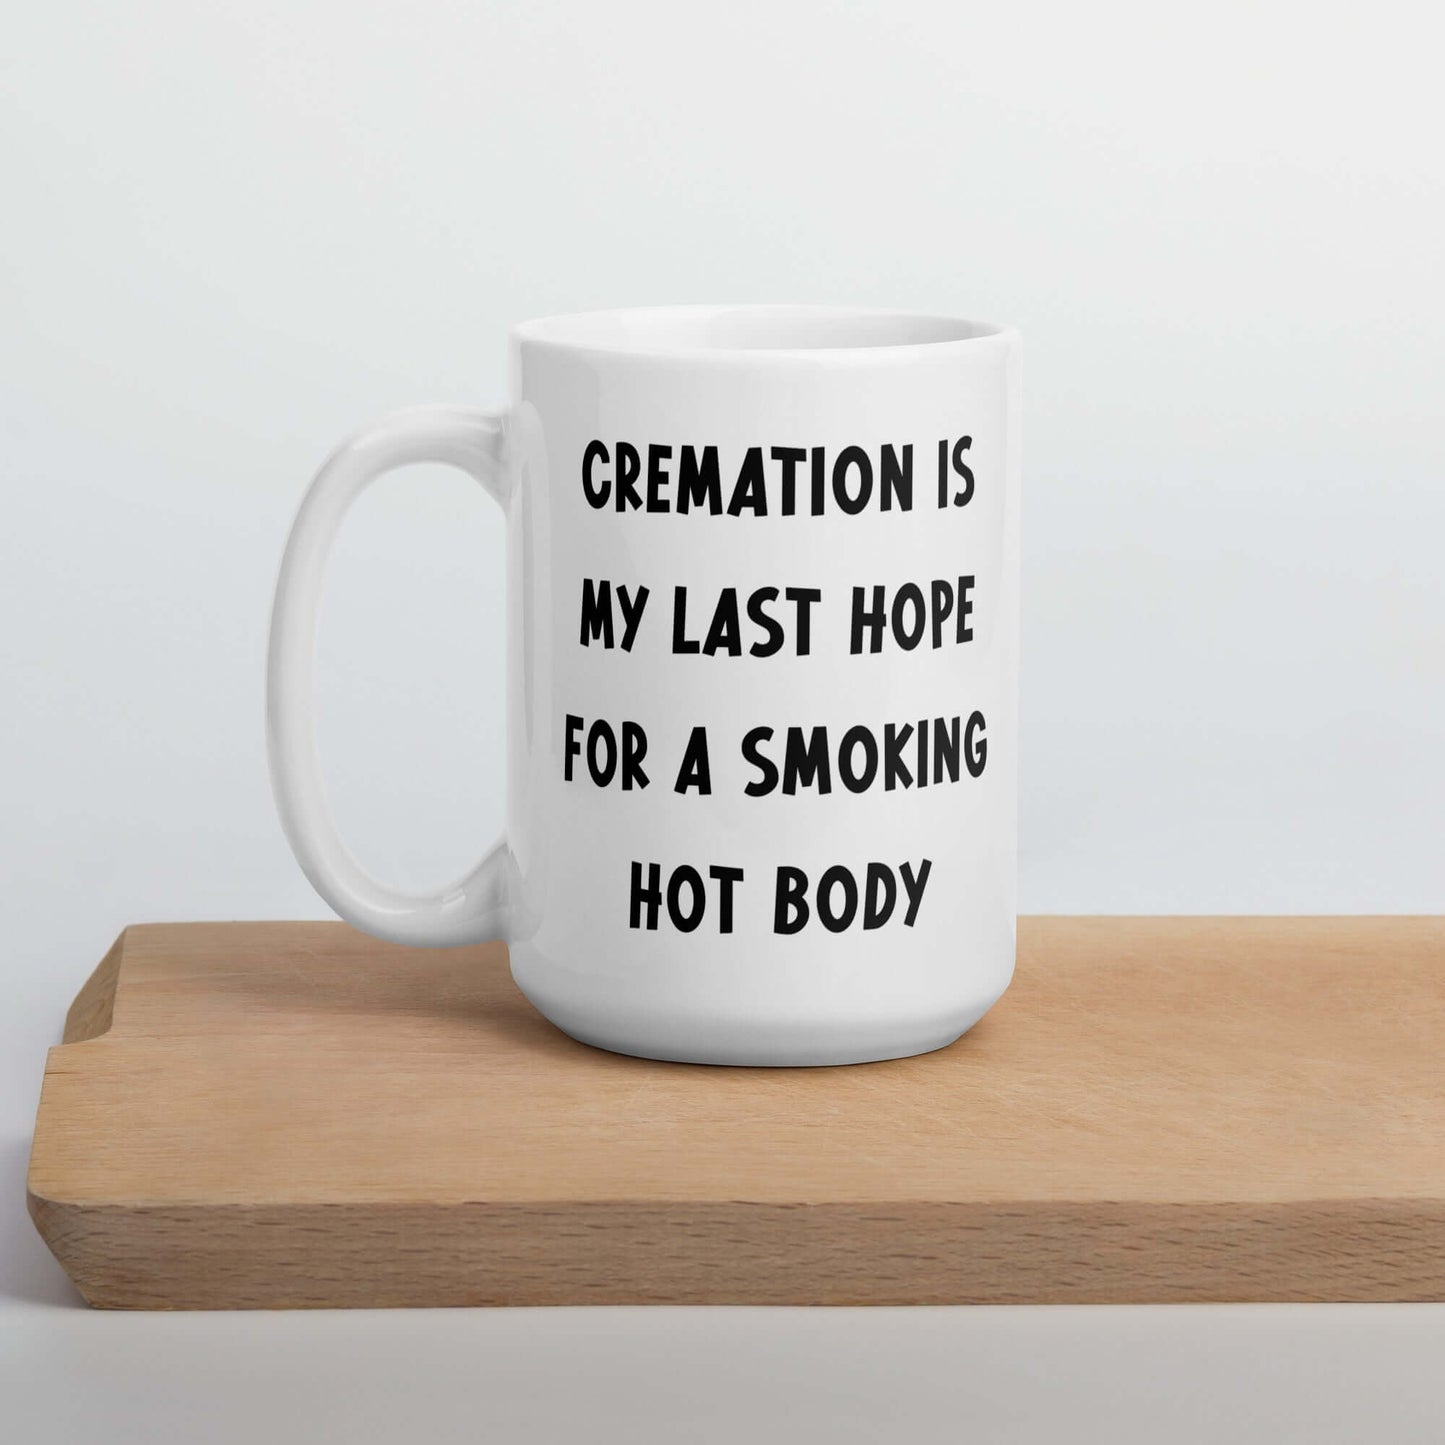 Cremation hot body joke mug